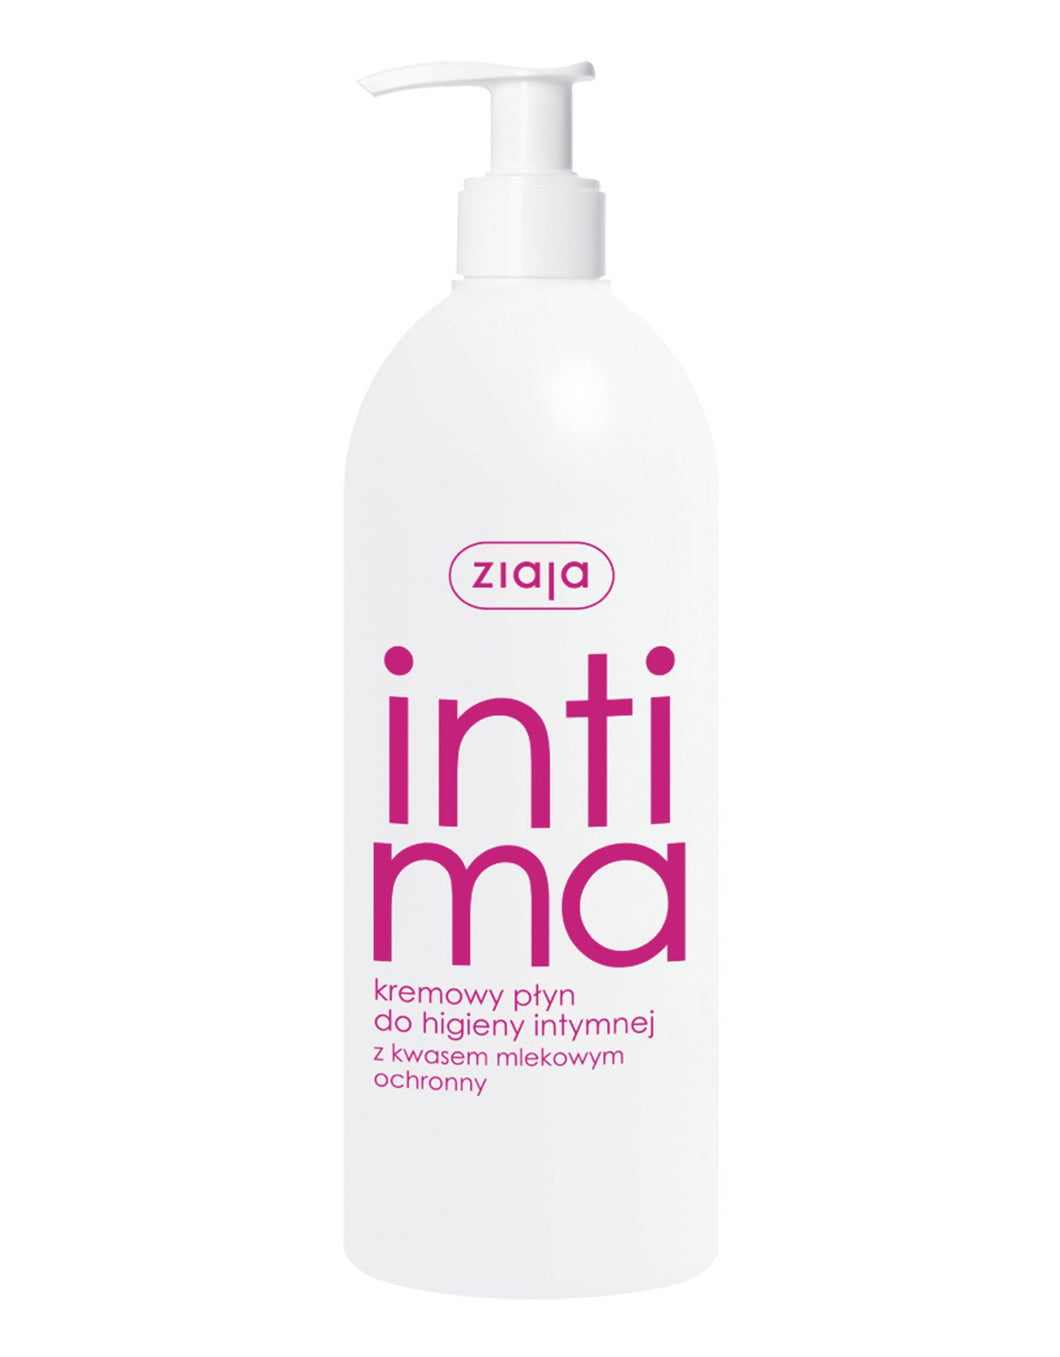 Ziaja Intima Creamy Hygiene Lotion with Lactic Acid 500ml